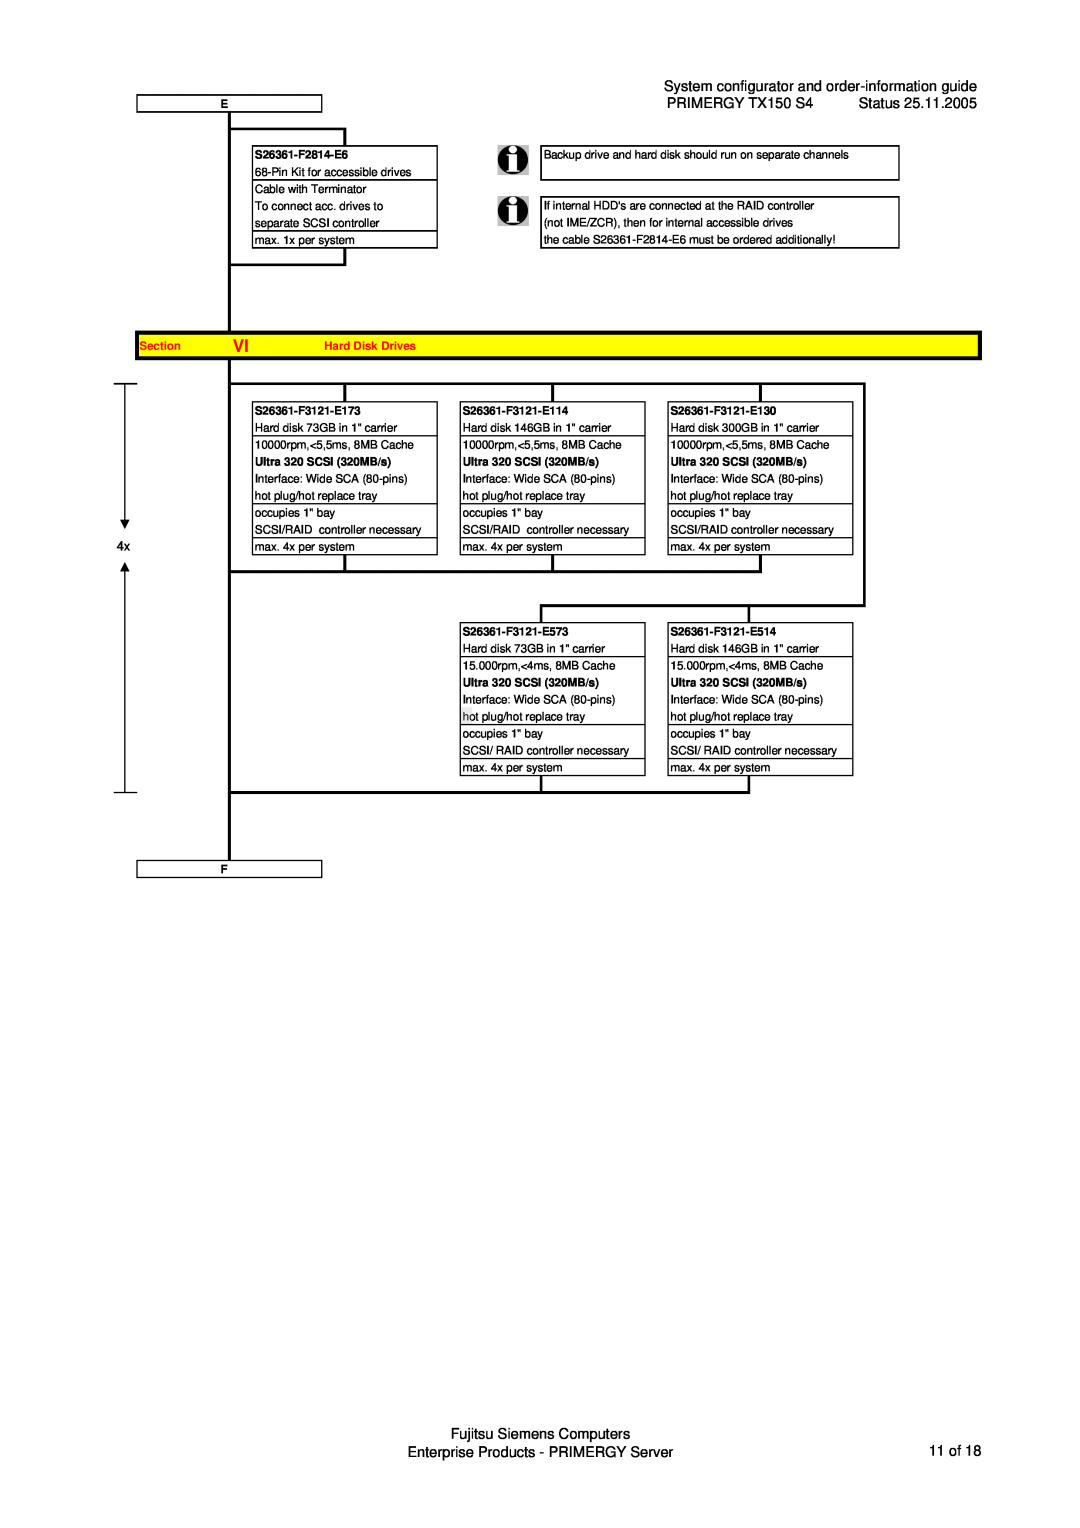 Fujitsu System configurator and order-information guide, PRIMERGY TX150 S4, Fujitsu Siemens Computers, Status, 11 of 